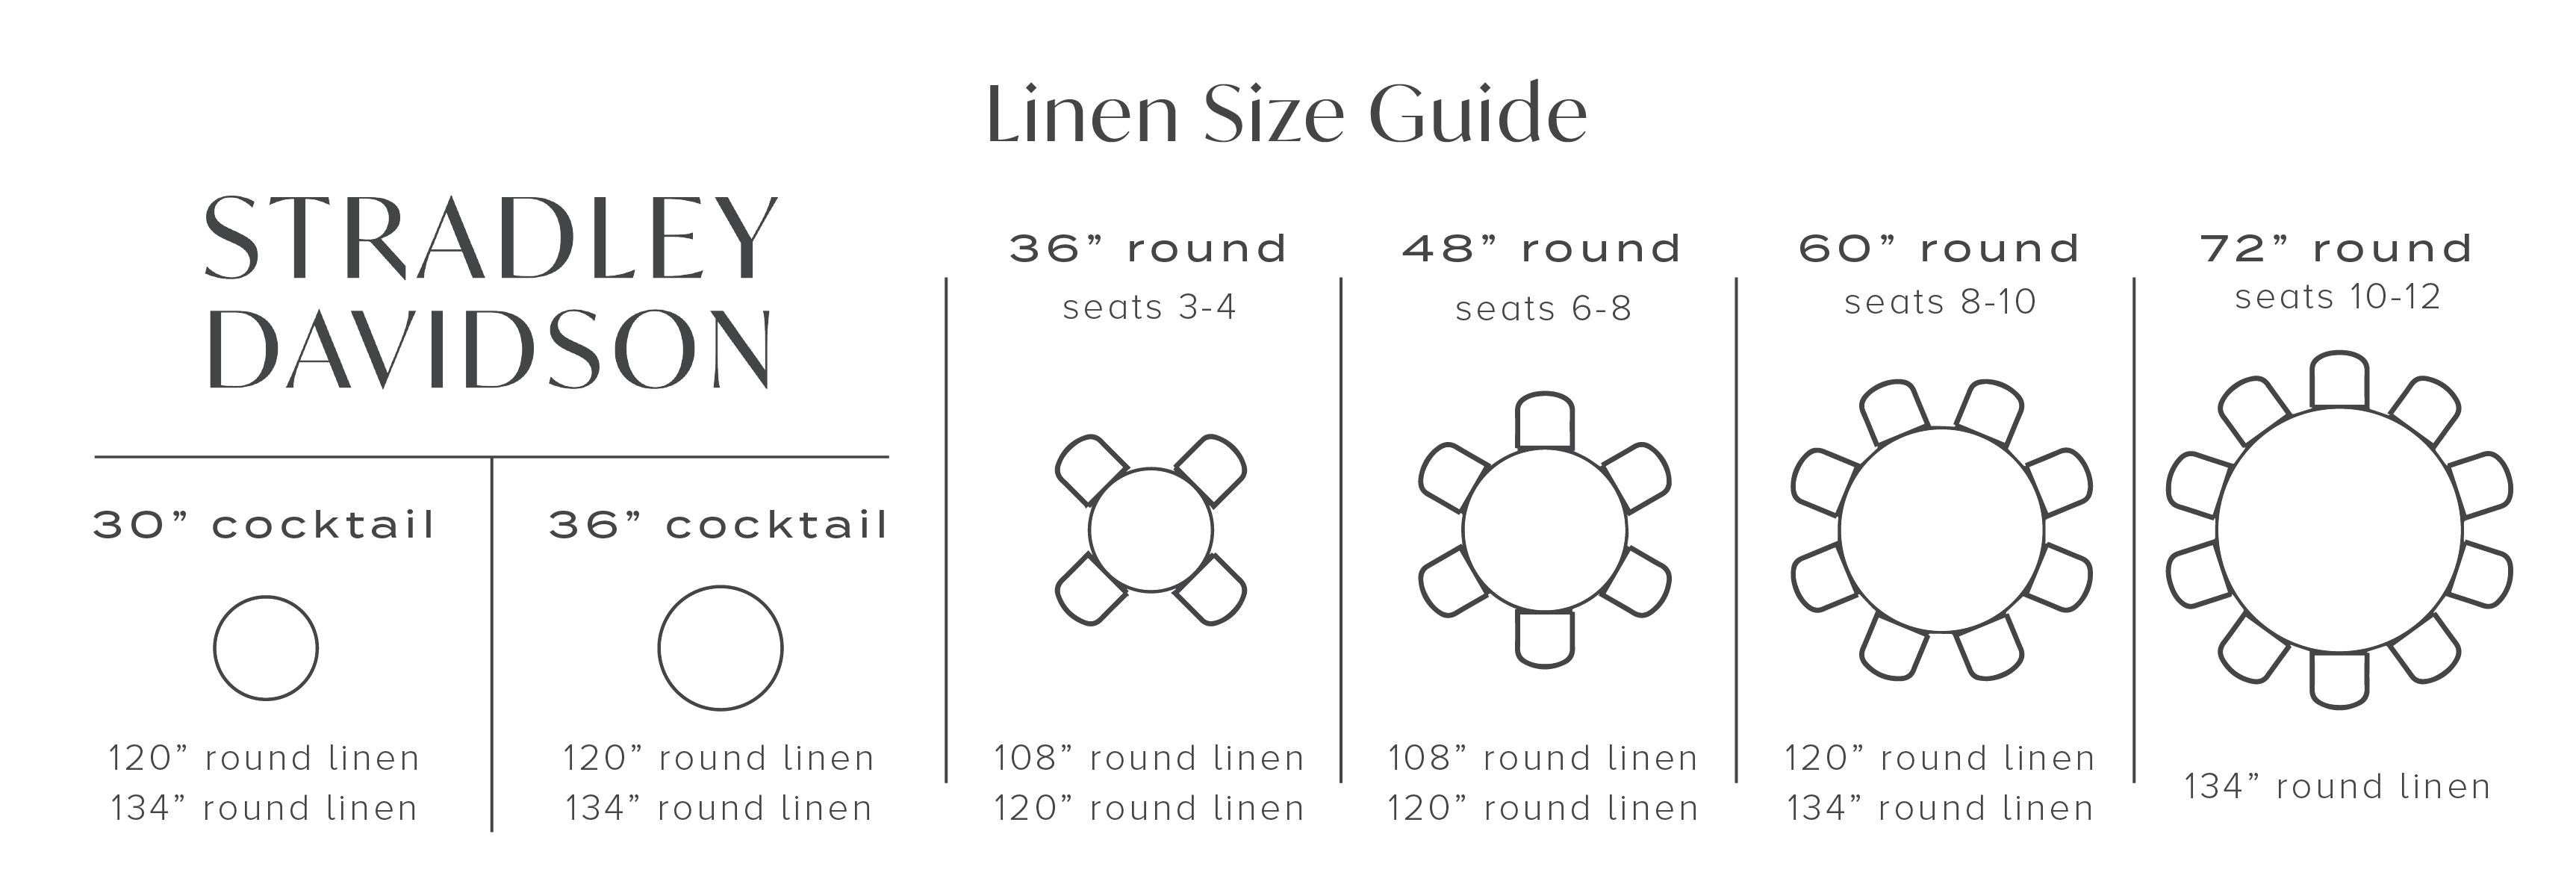 Linen Size Guide